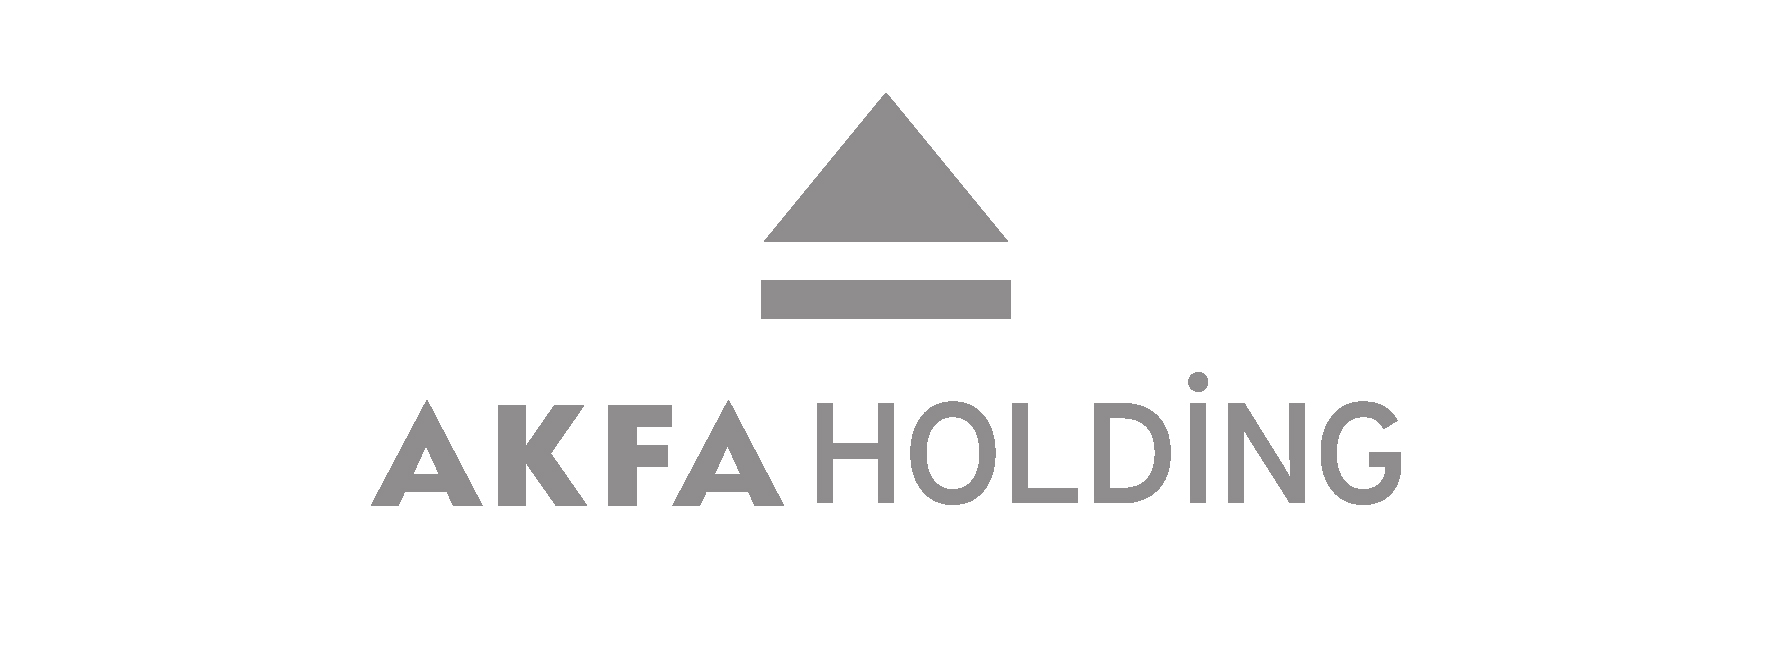 akfa holding